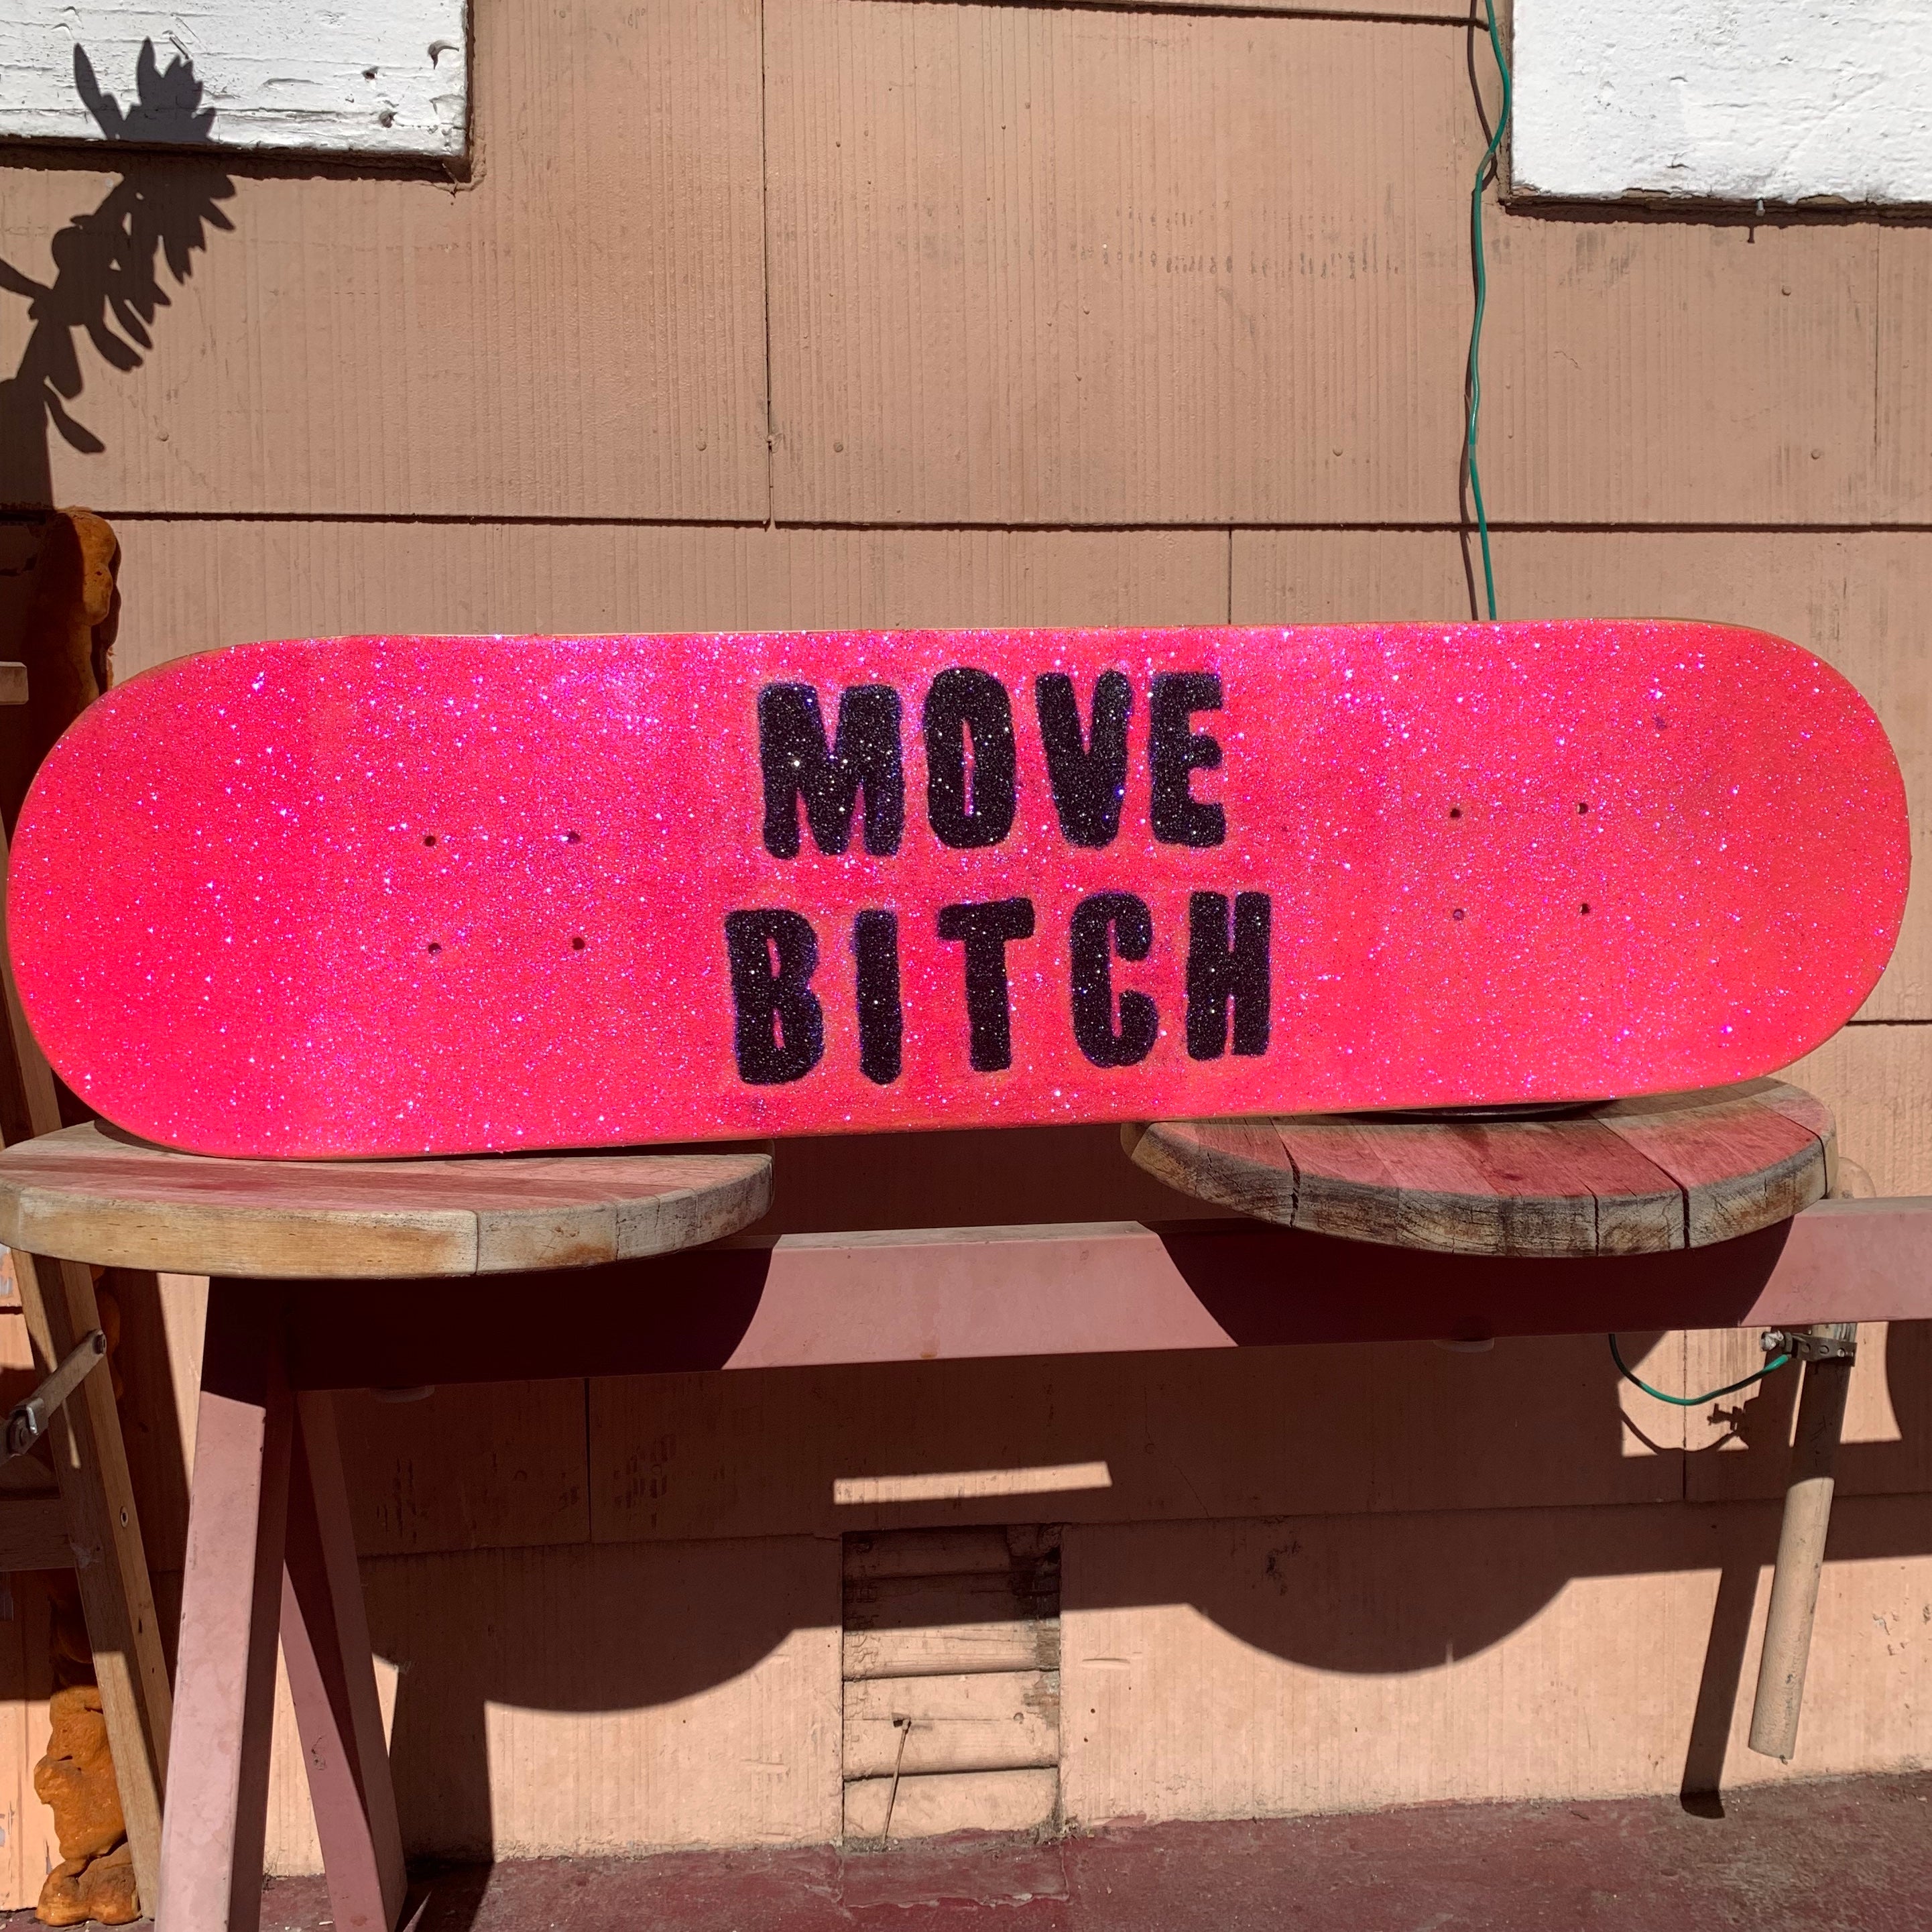 the luda (move bitch) glitter skateboard